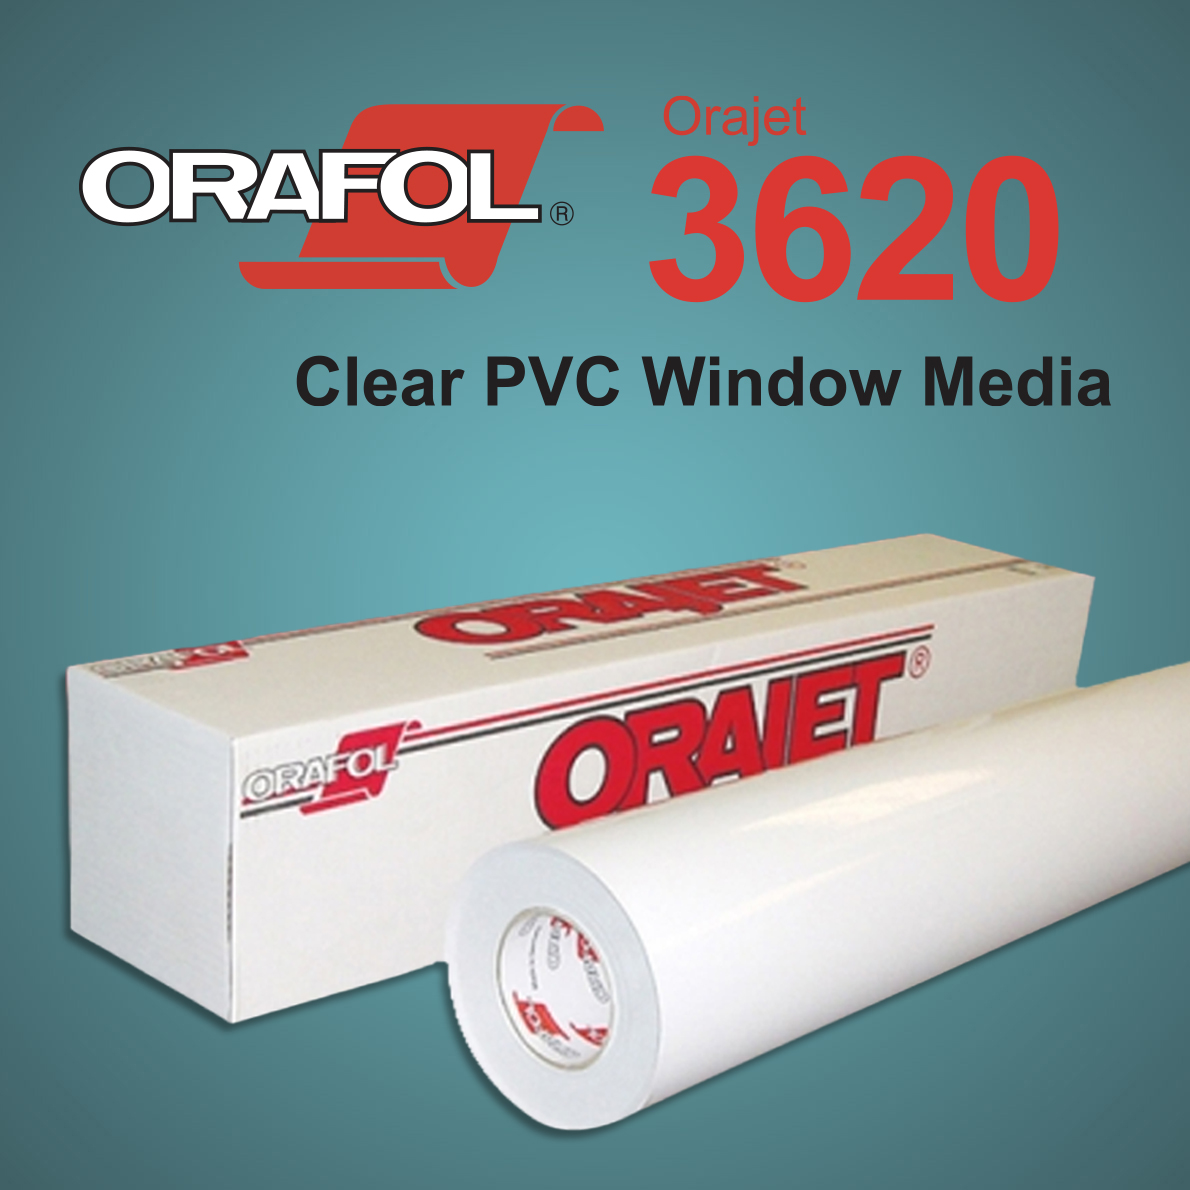 v5.SignMart > Printable Vinyl > SignMart Orajet ® 3620 Clear PVC